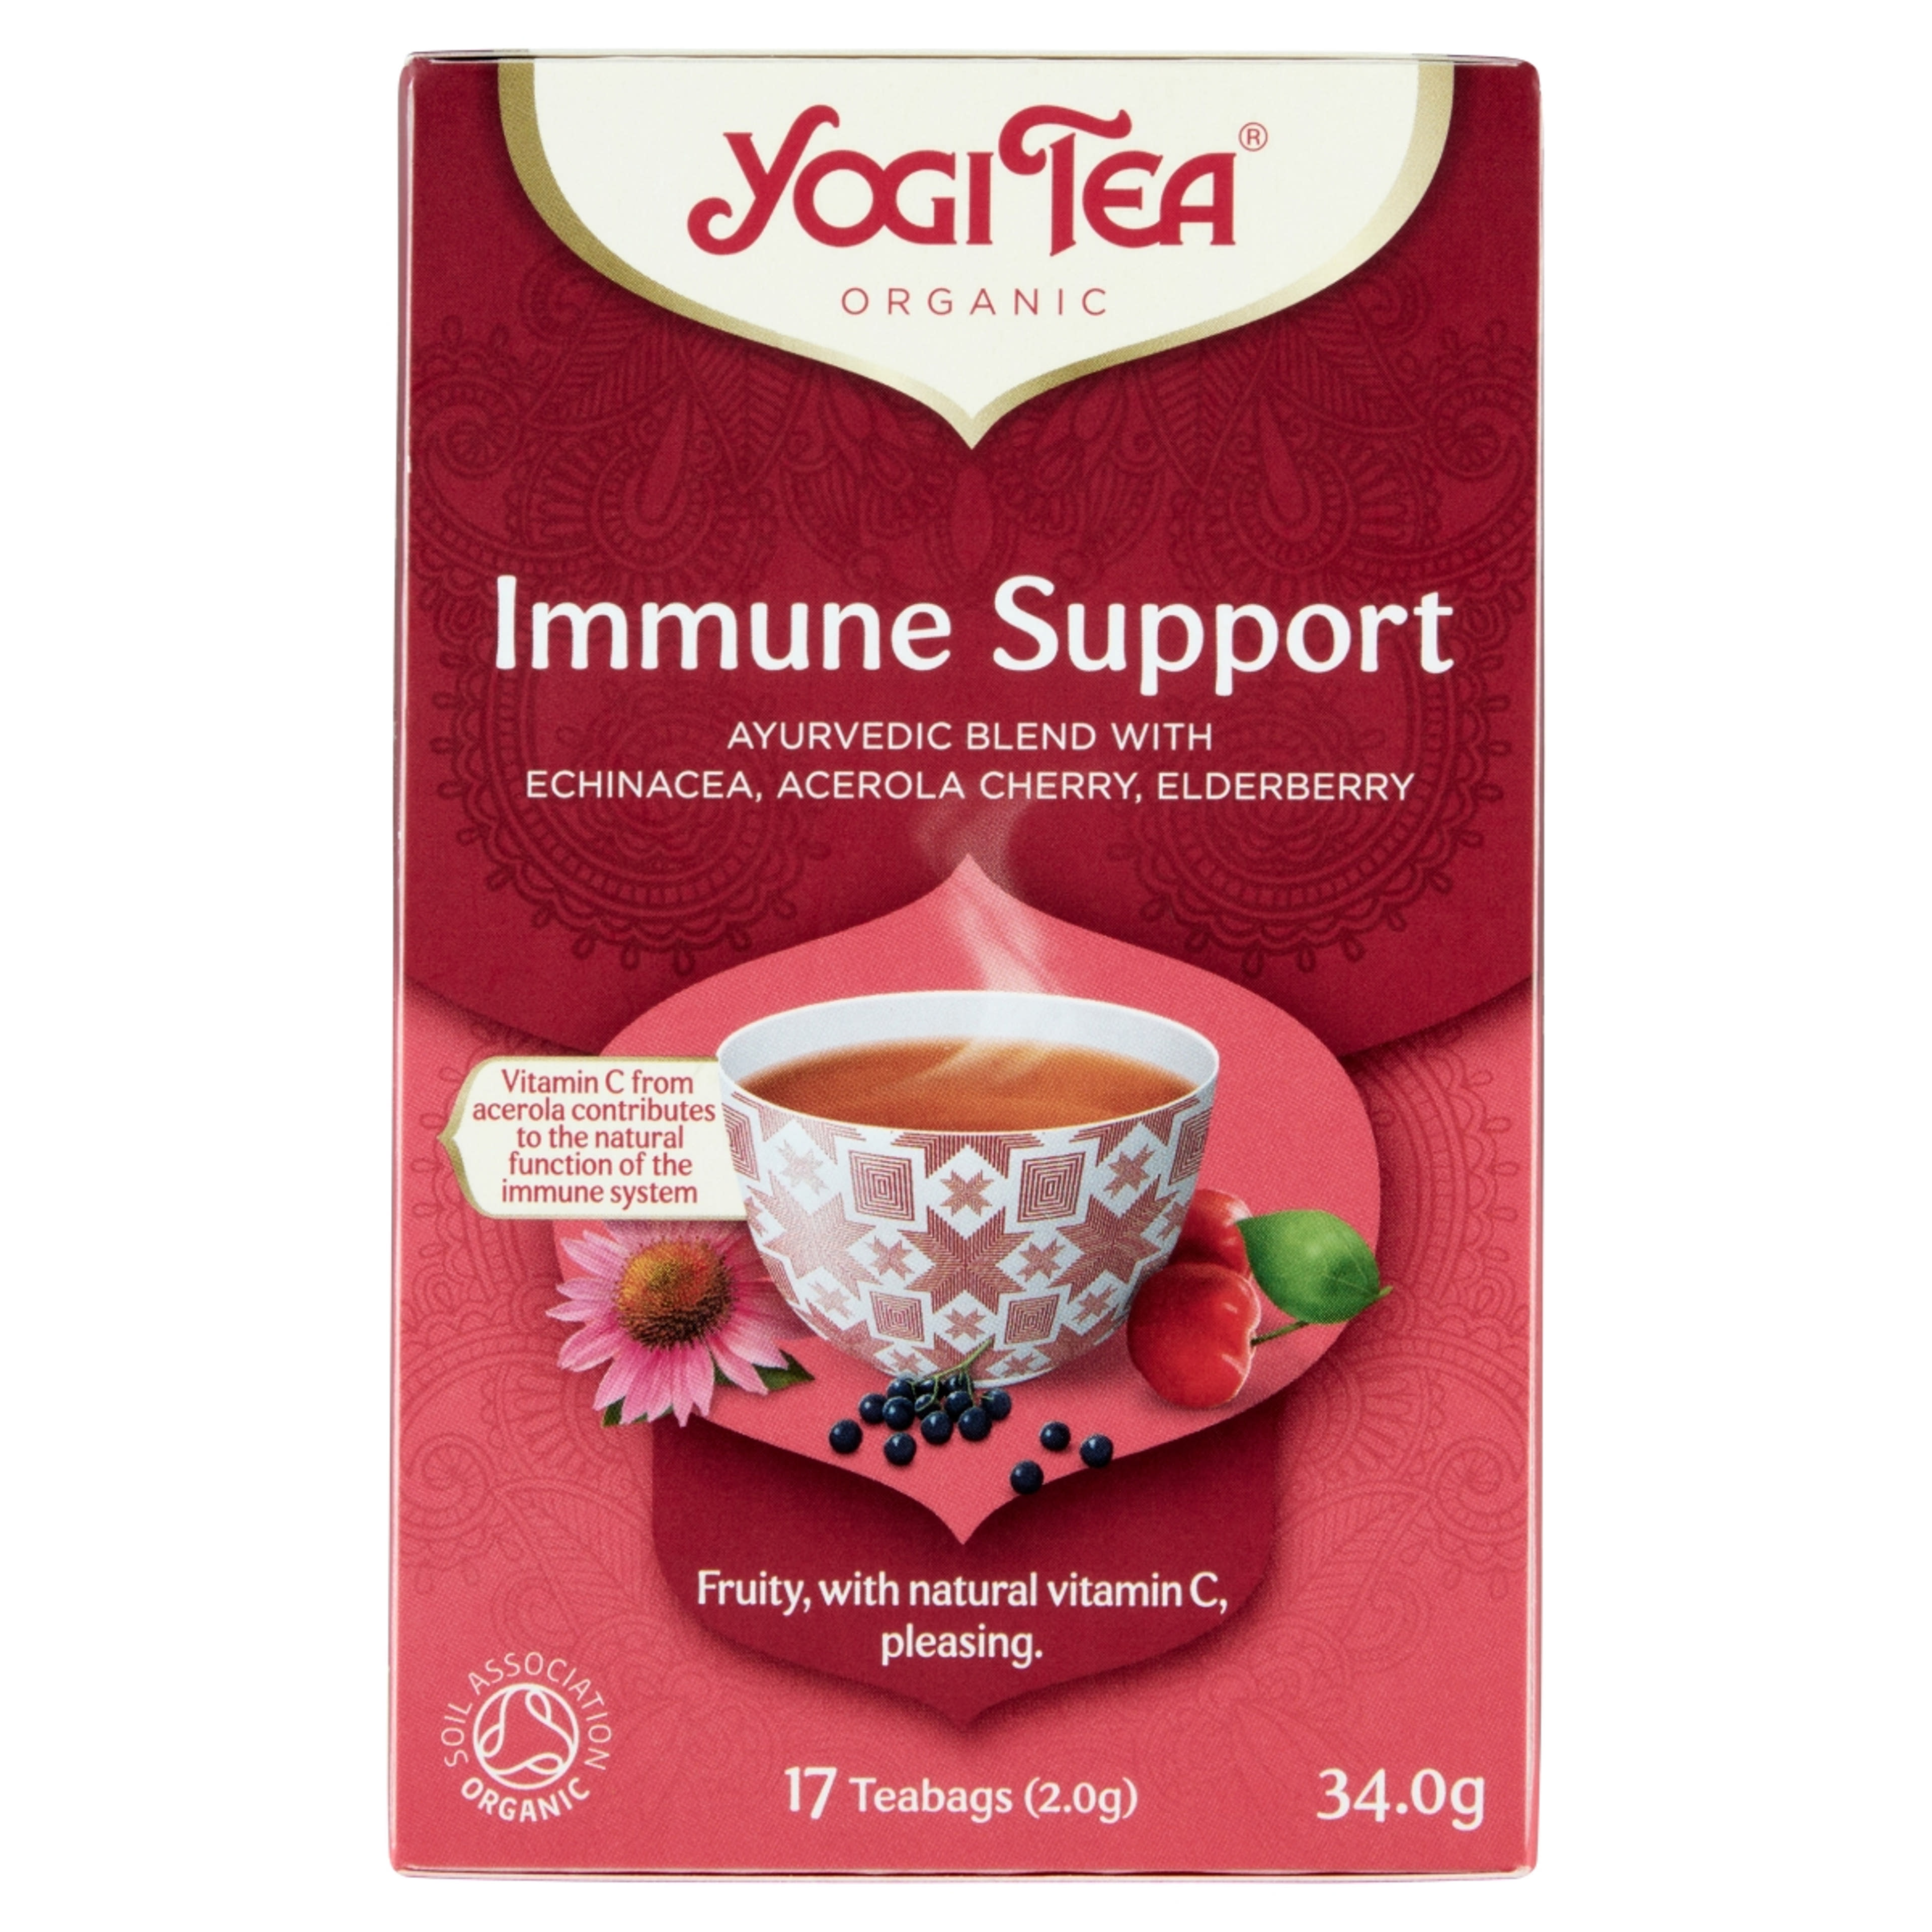 Yogi tea immune support bio tea - 34 g